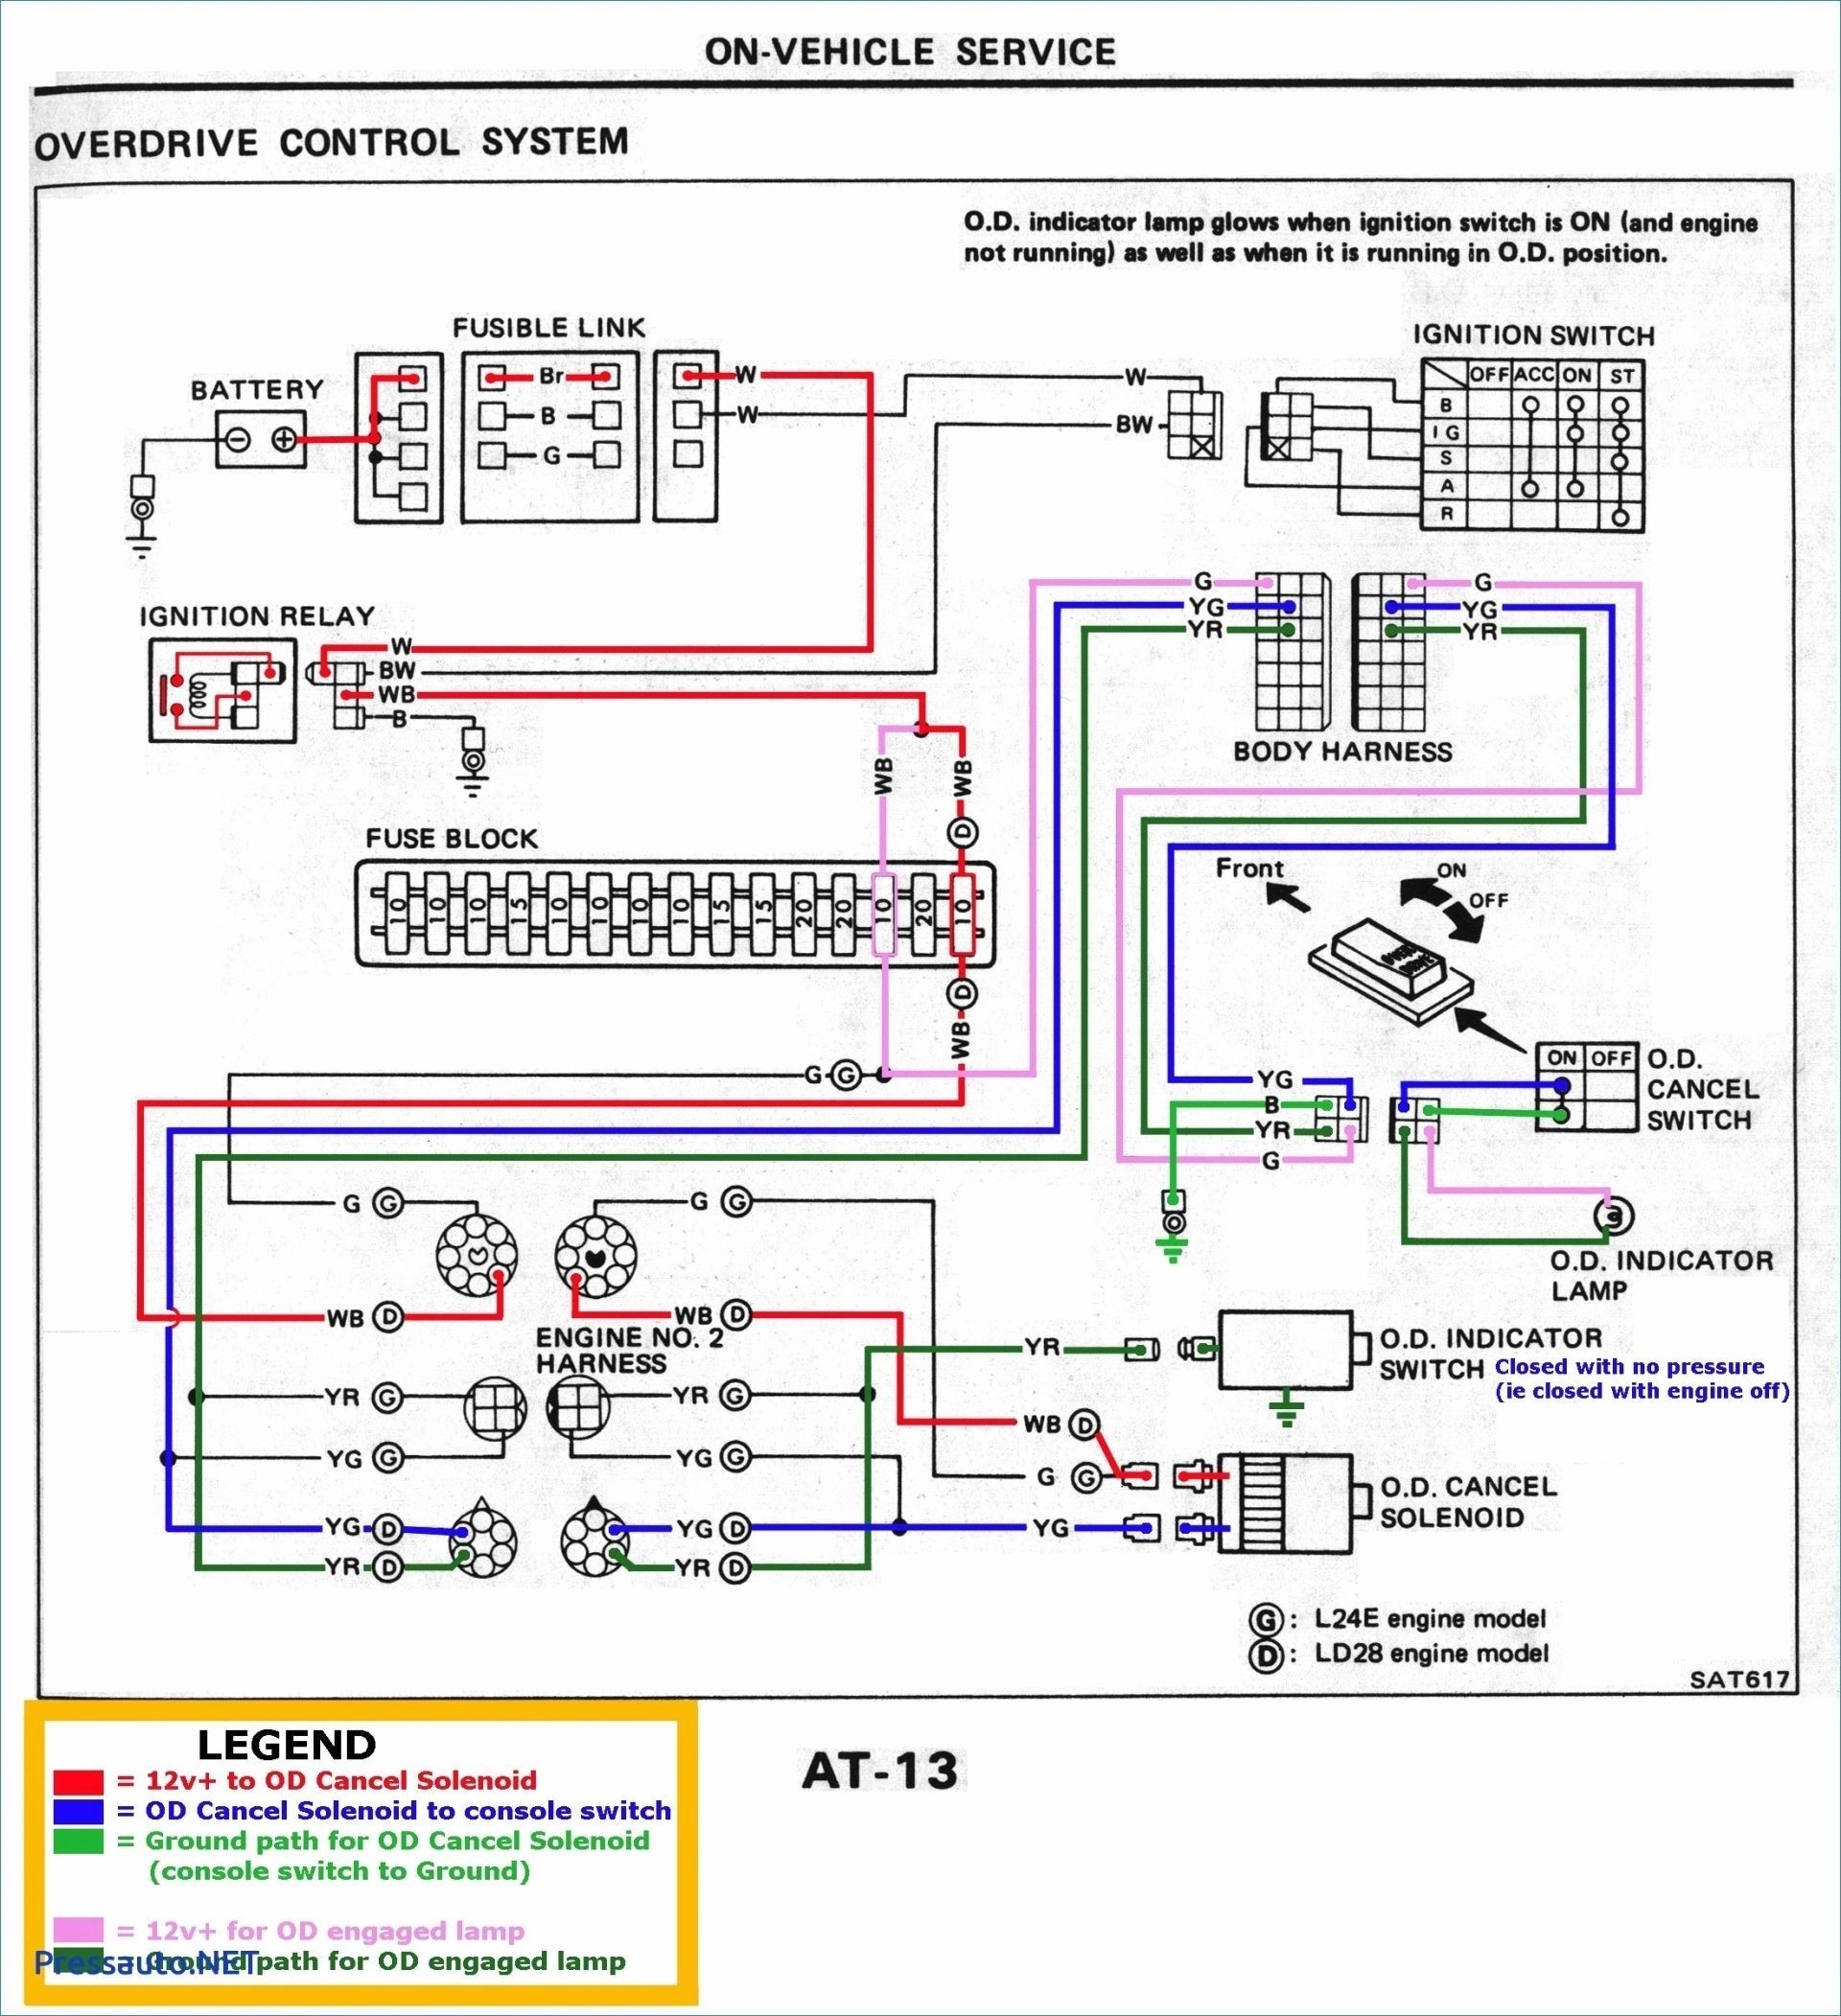 Car Air Horn Wiring Diagram 2c95 New Holland ford Tractor Alternator Wiring Diagram Of Car Air Horn Wiring Diagram